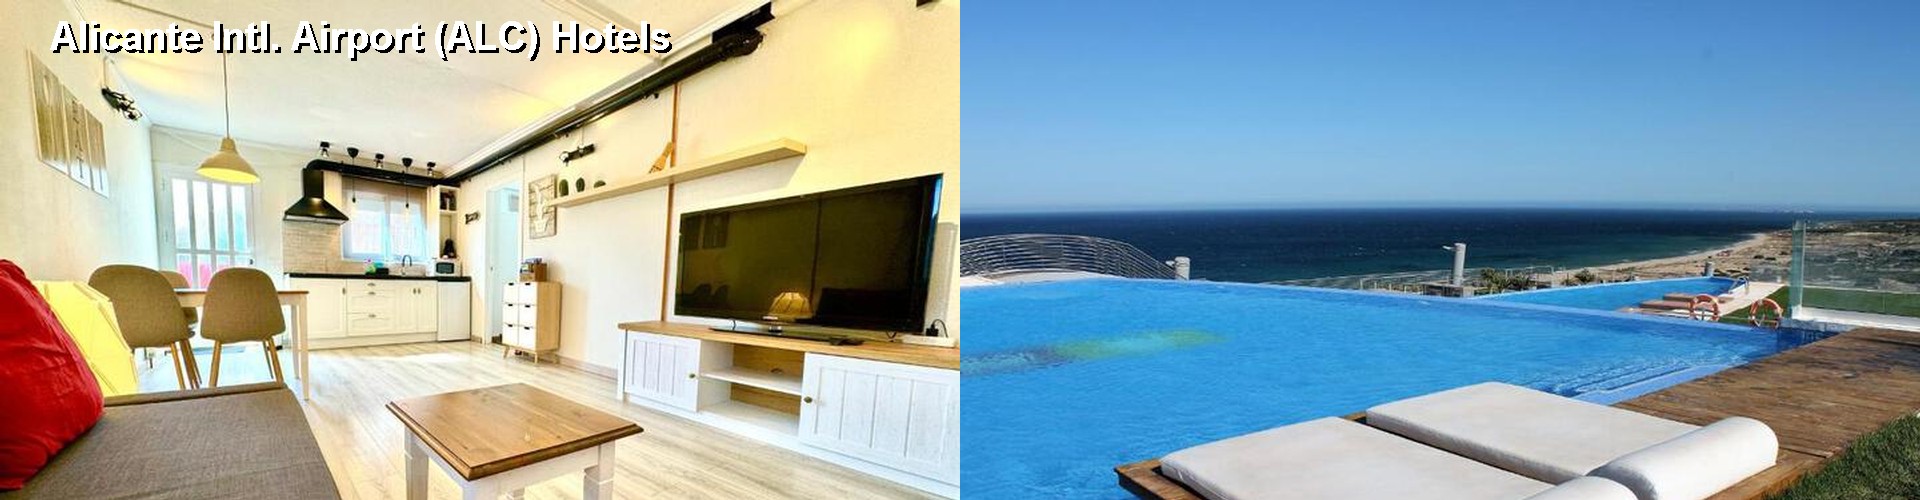 5 Best Hotels near Alicante Intl. Airport (ALC)